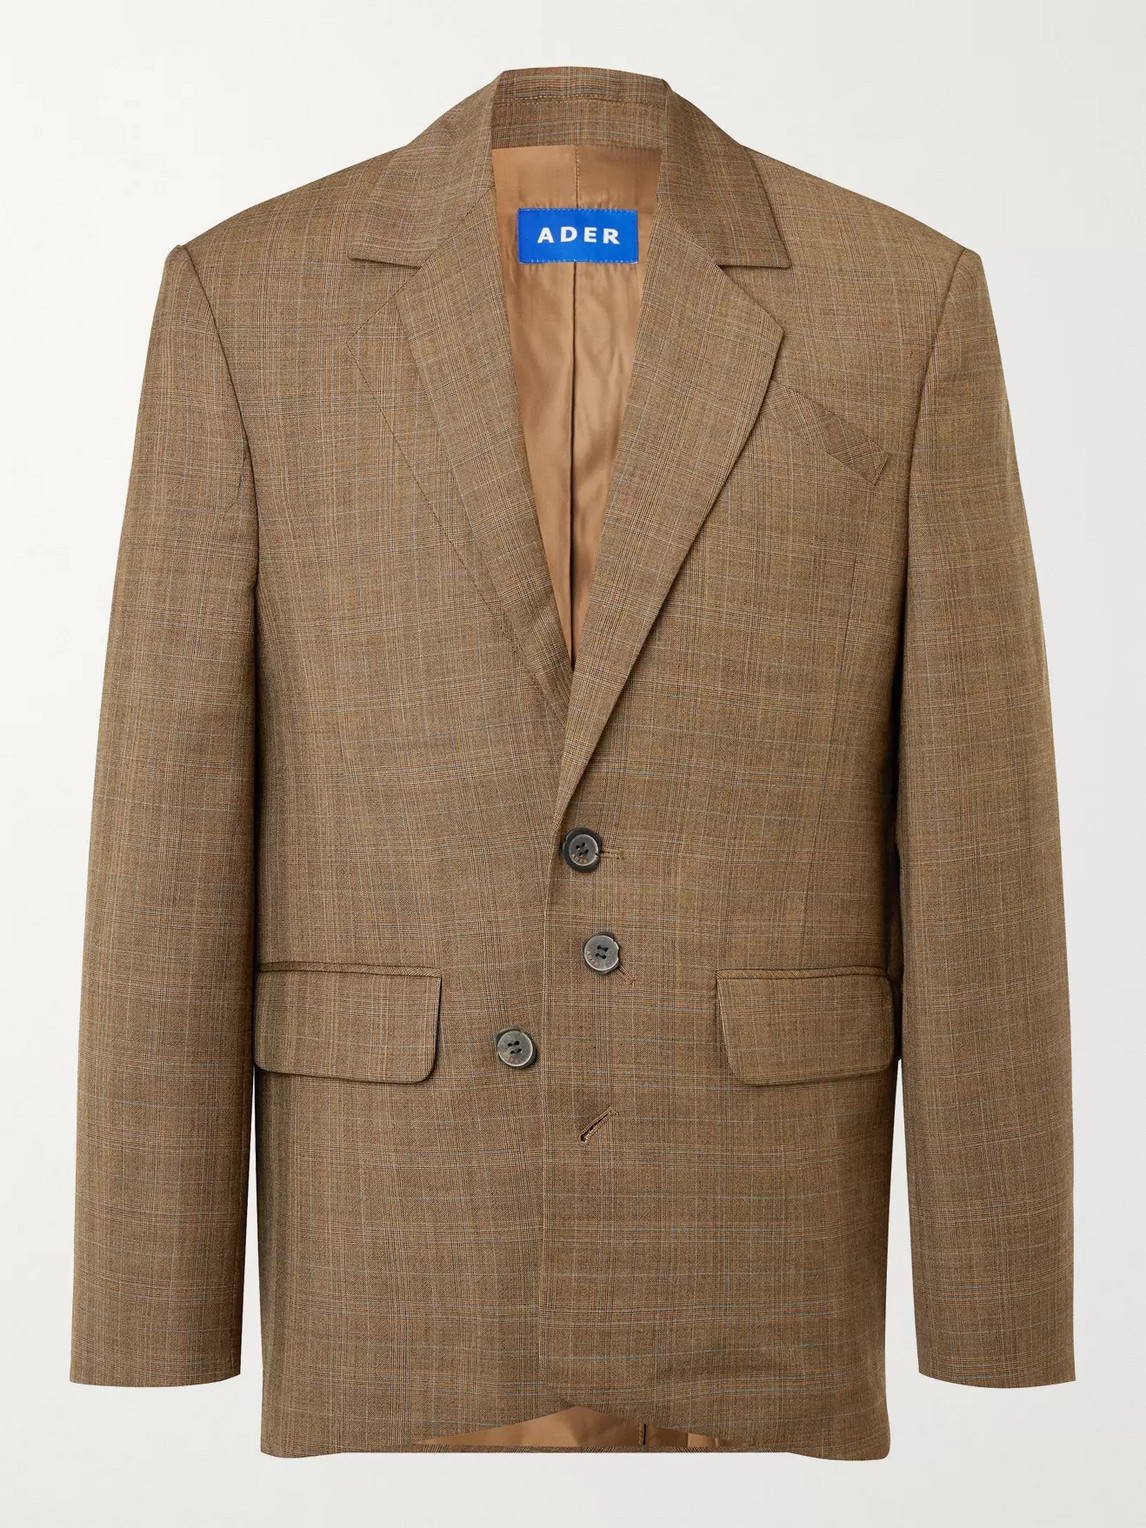 Ader Error Checked Wool Suit Jacket In Brown